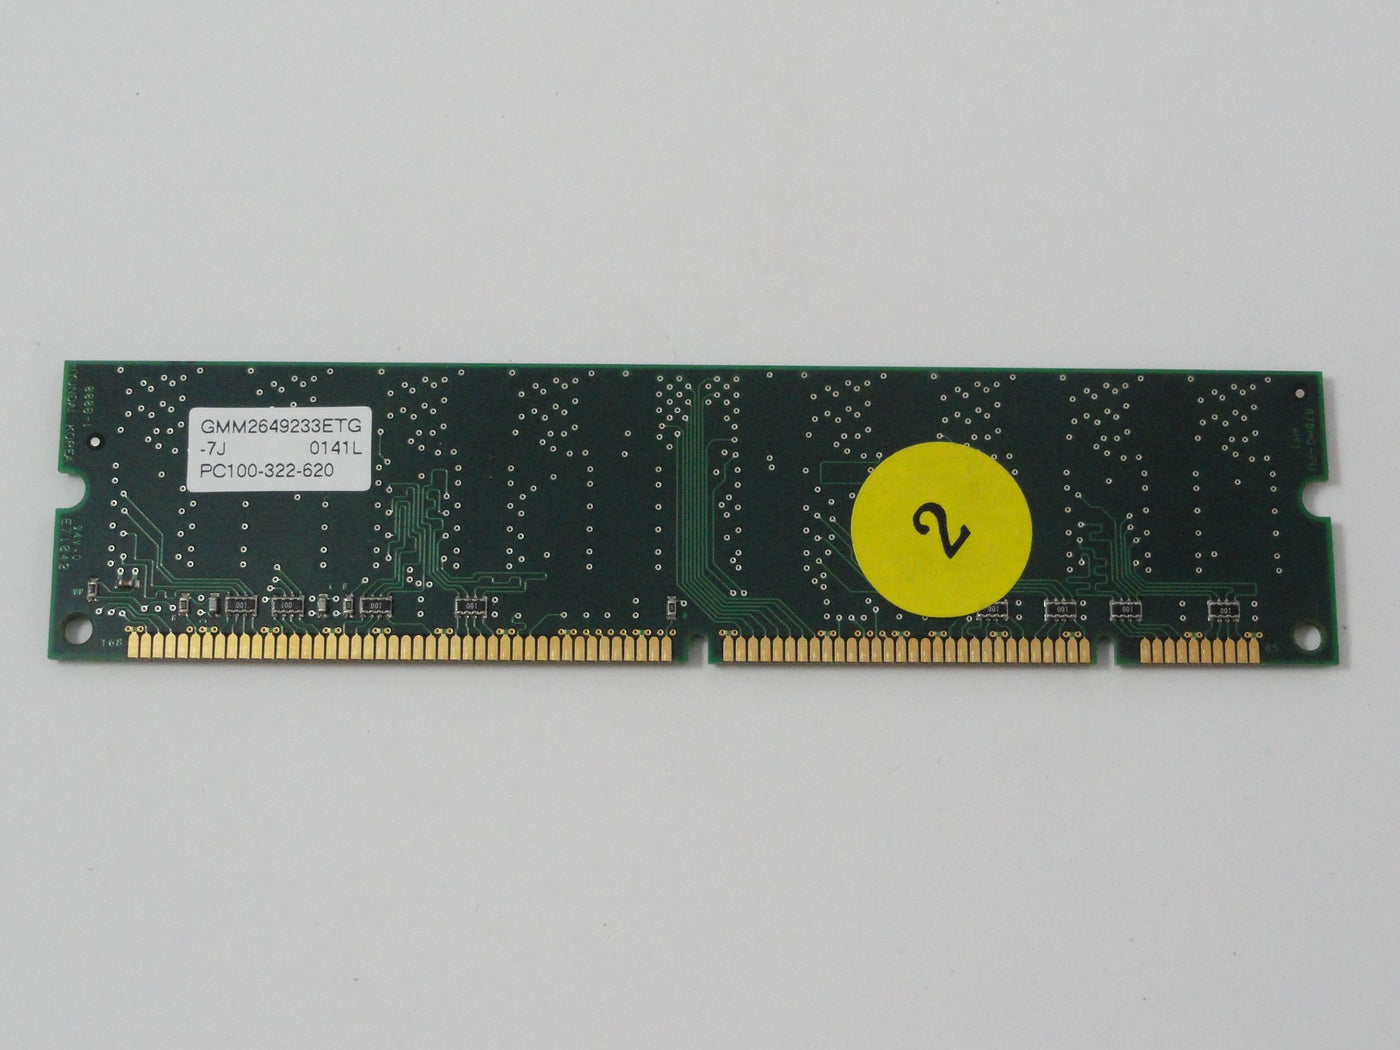 PR03927_1818-7321_HP 64MB 168Pin PC100 CL2 SDRAM DIMM - Image2